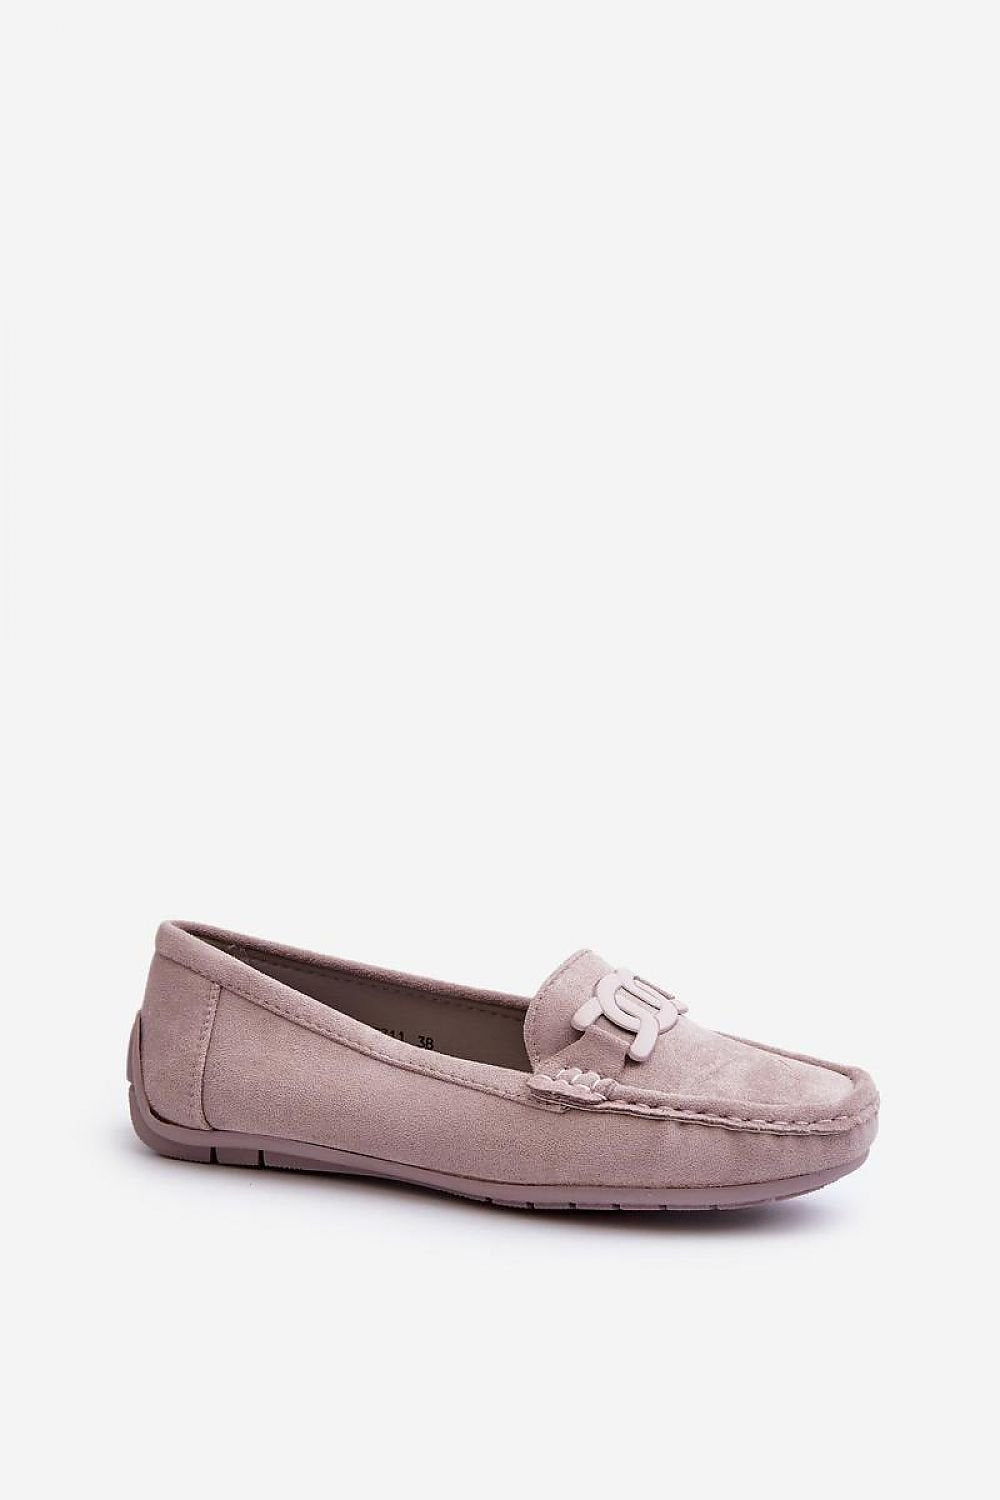 TEEK - Soft Link Top Mocassin Loafers SHOES TEEK MH violet 6.5 